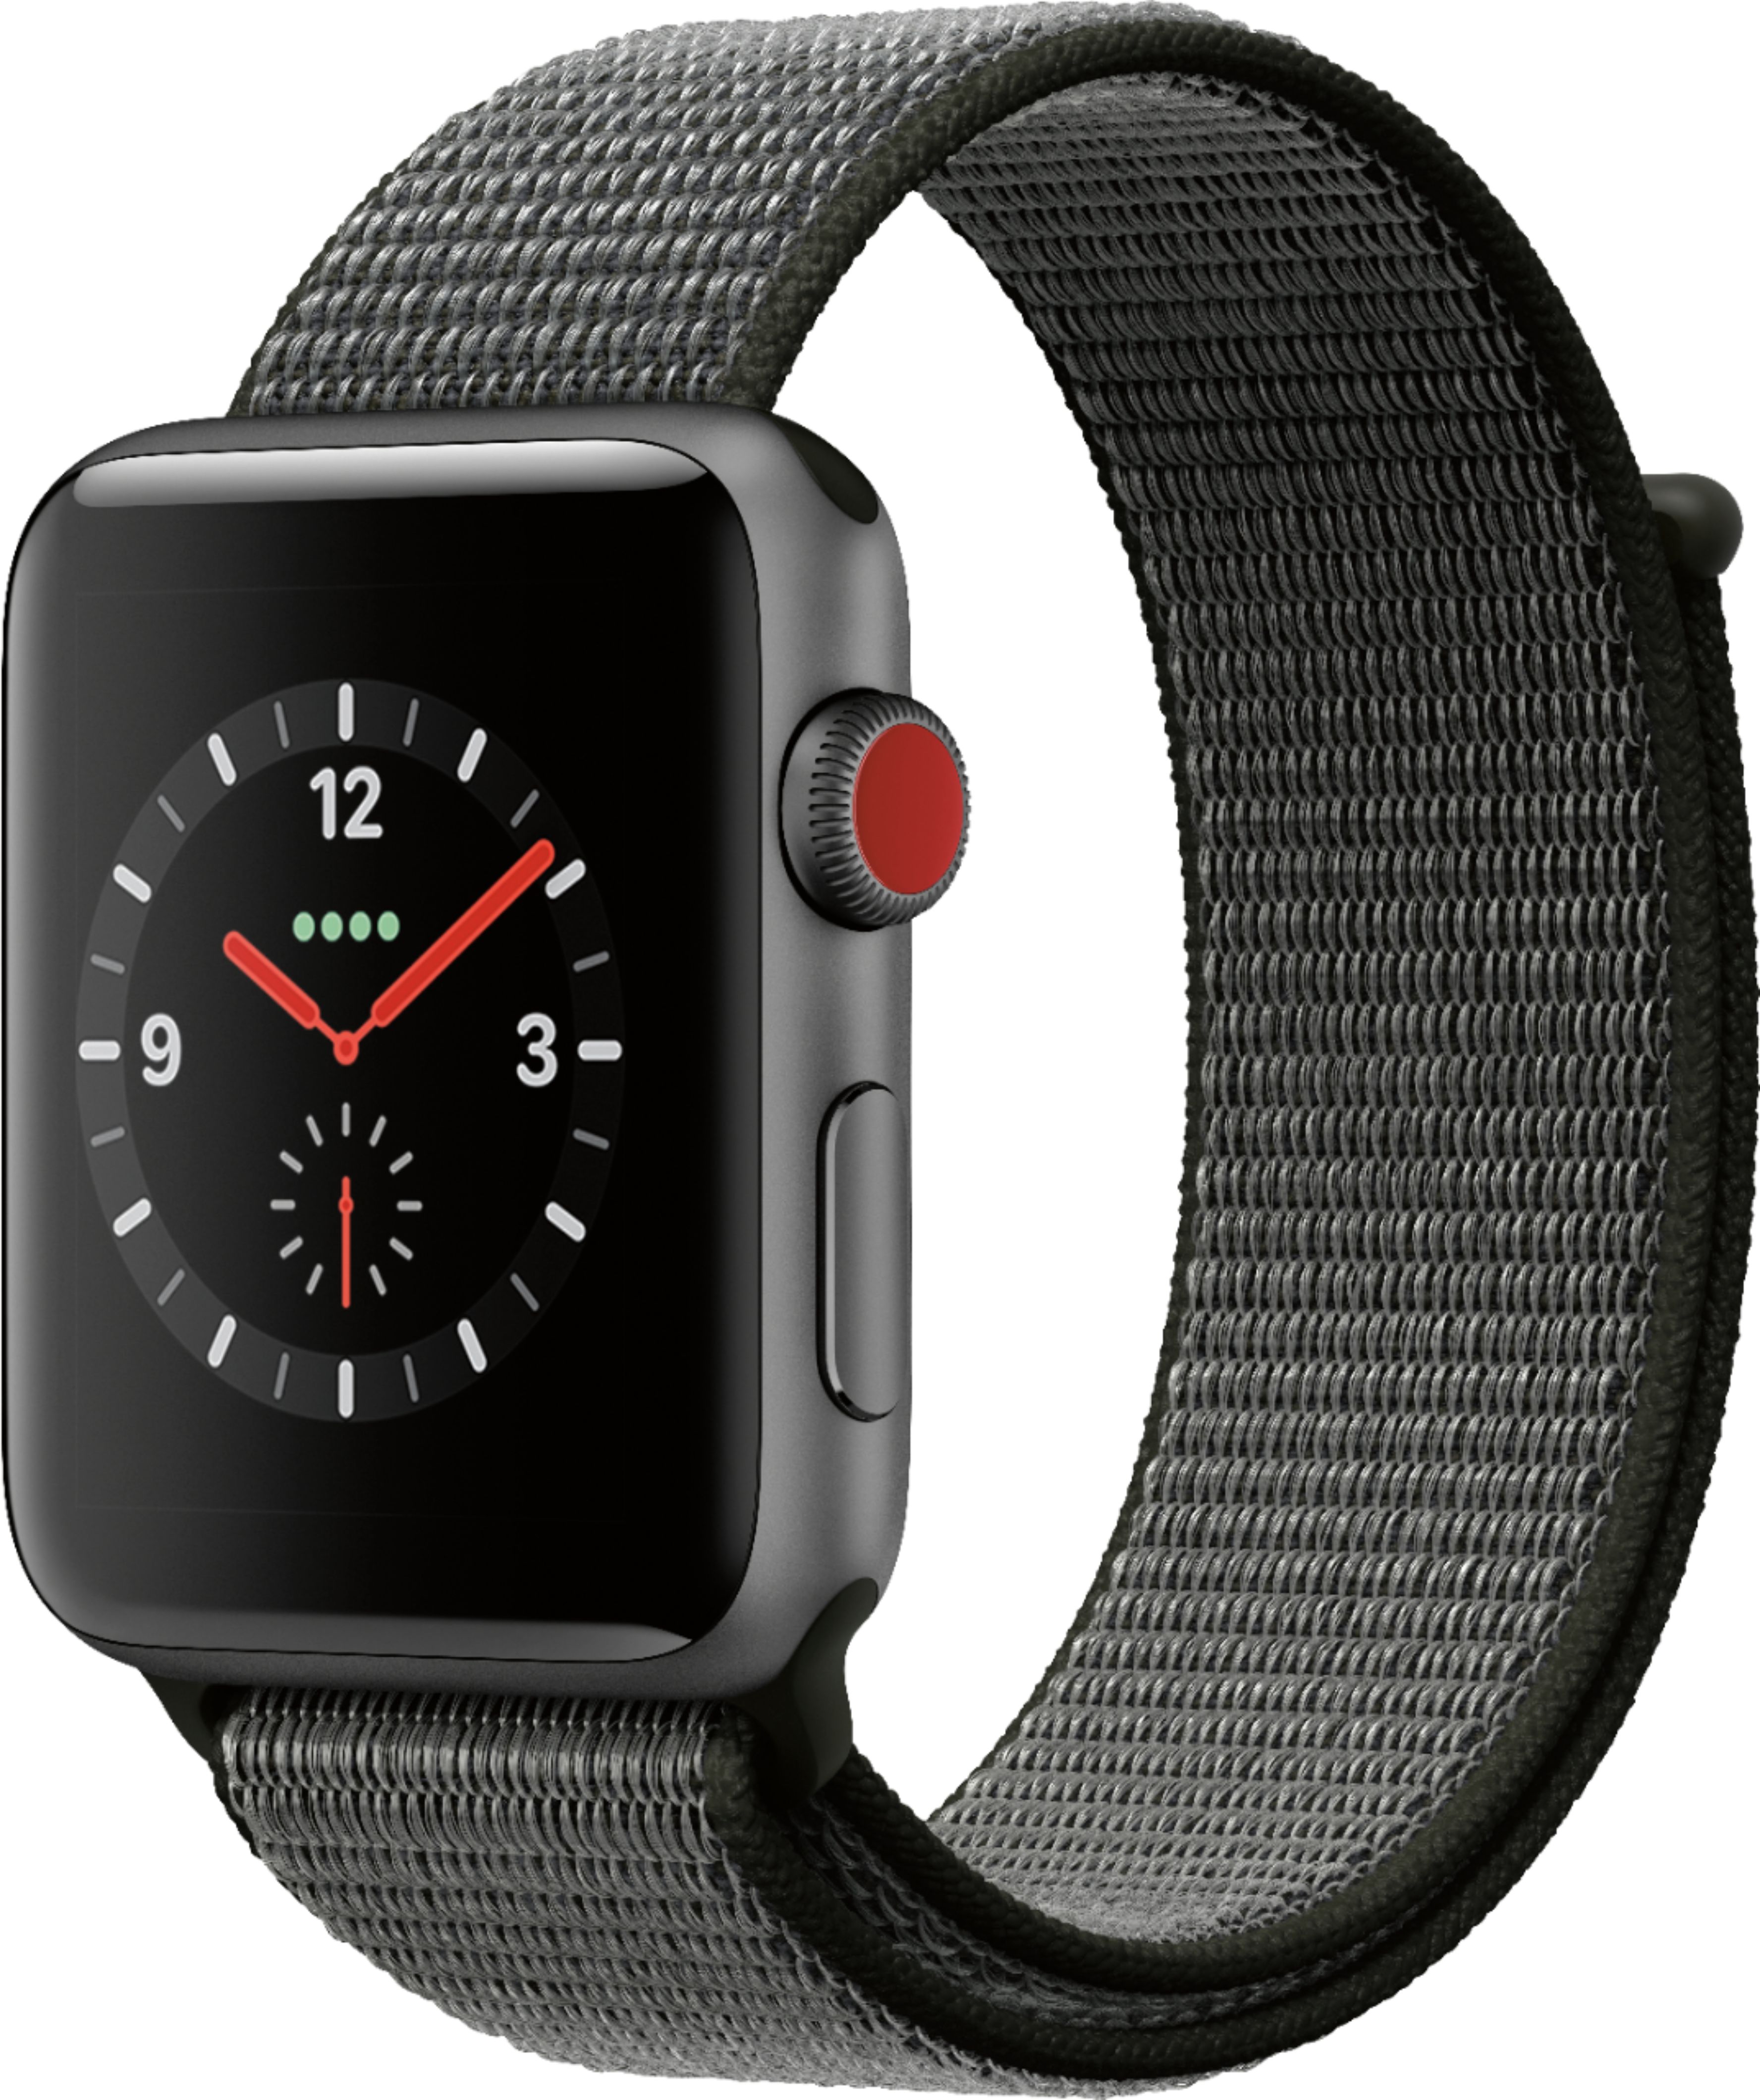 apple watch series 3 grey 42mm